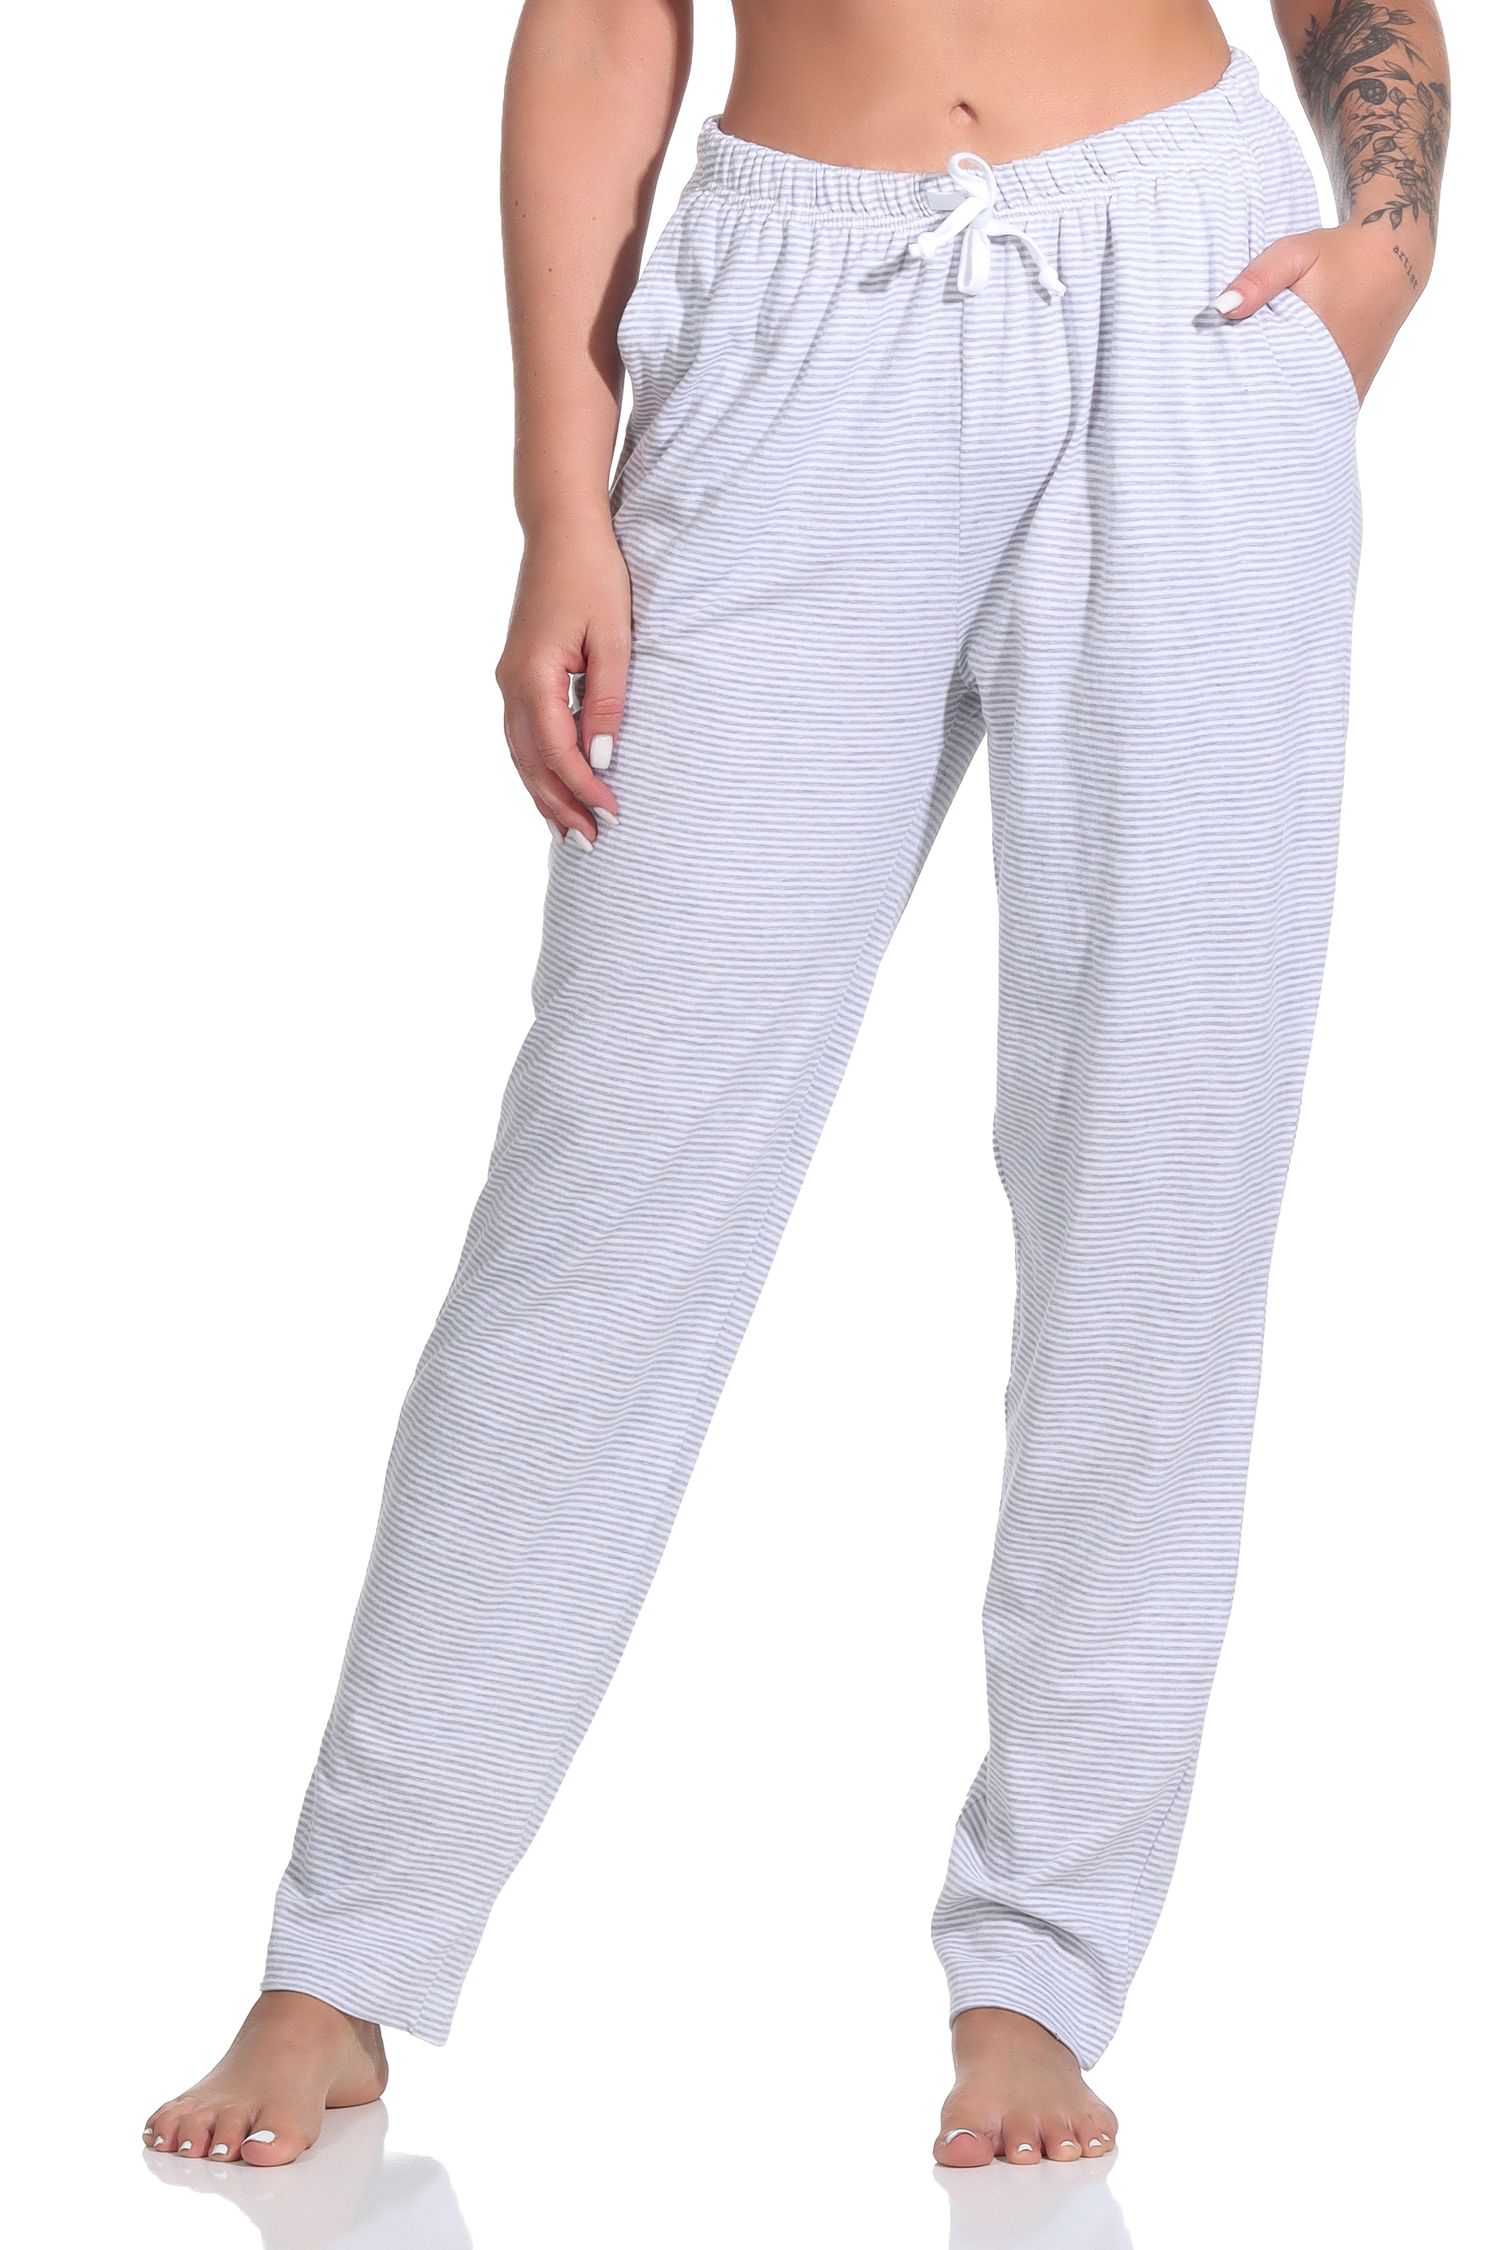 Damen Schlafanzug Pyjama Hose lang Mix & Match in Streifenoptik - perfekt zu kombinieren